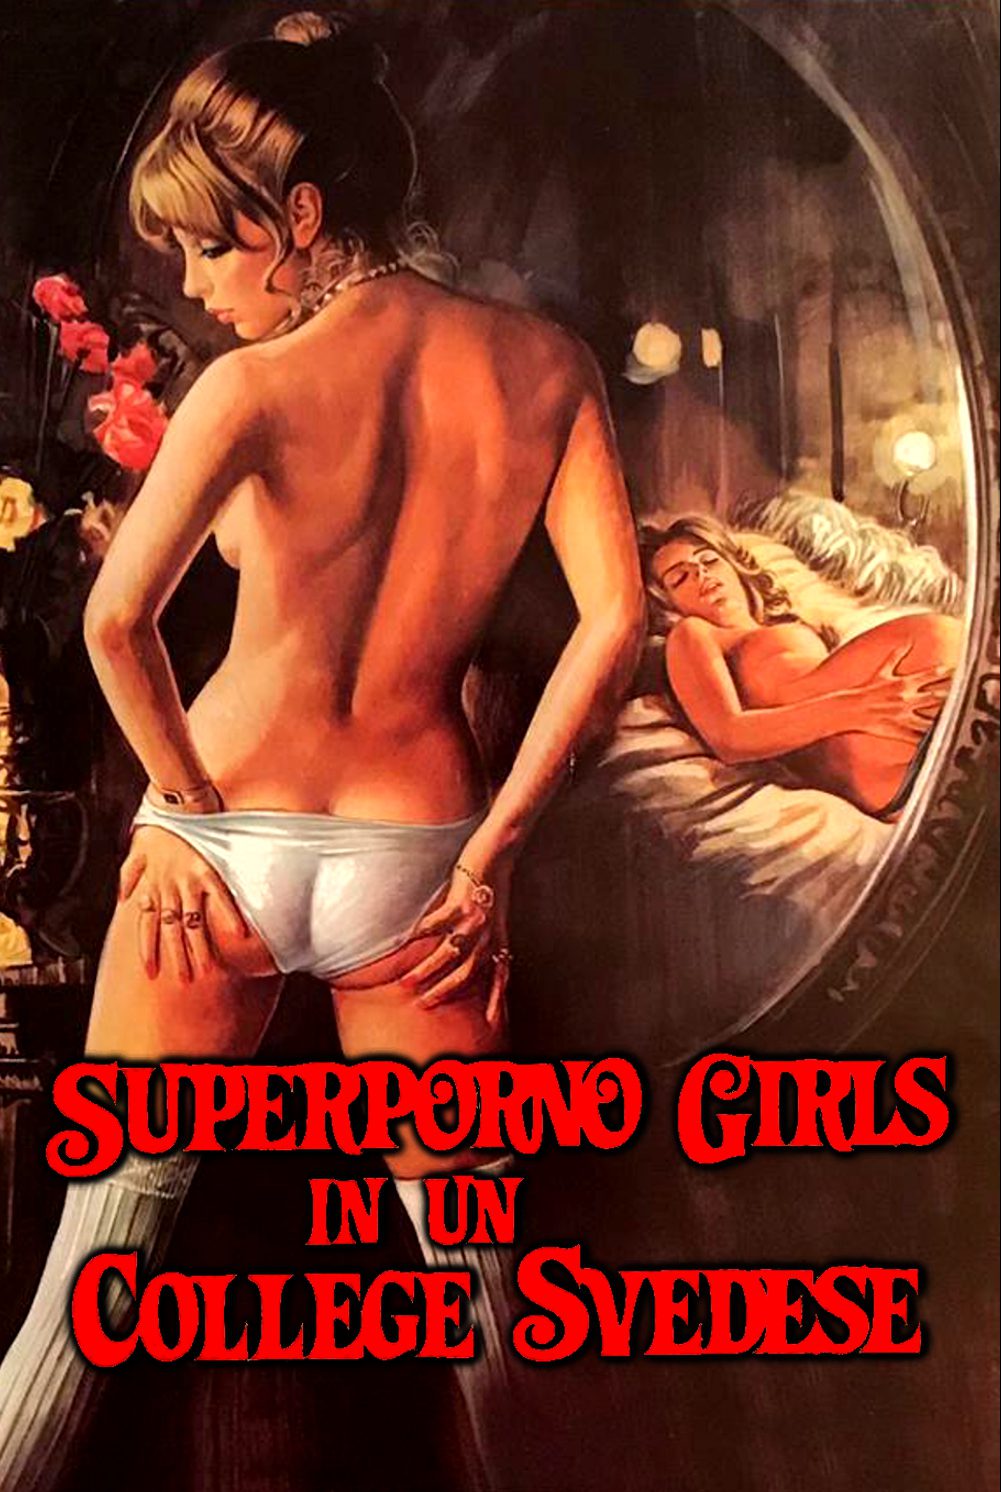 Superporno girls in un college svedese (1979)